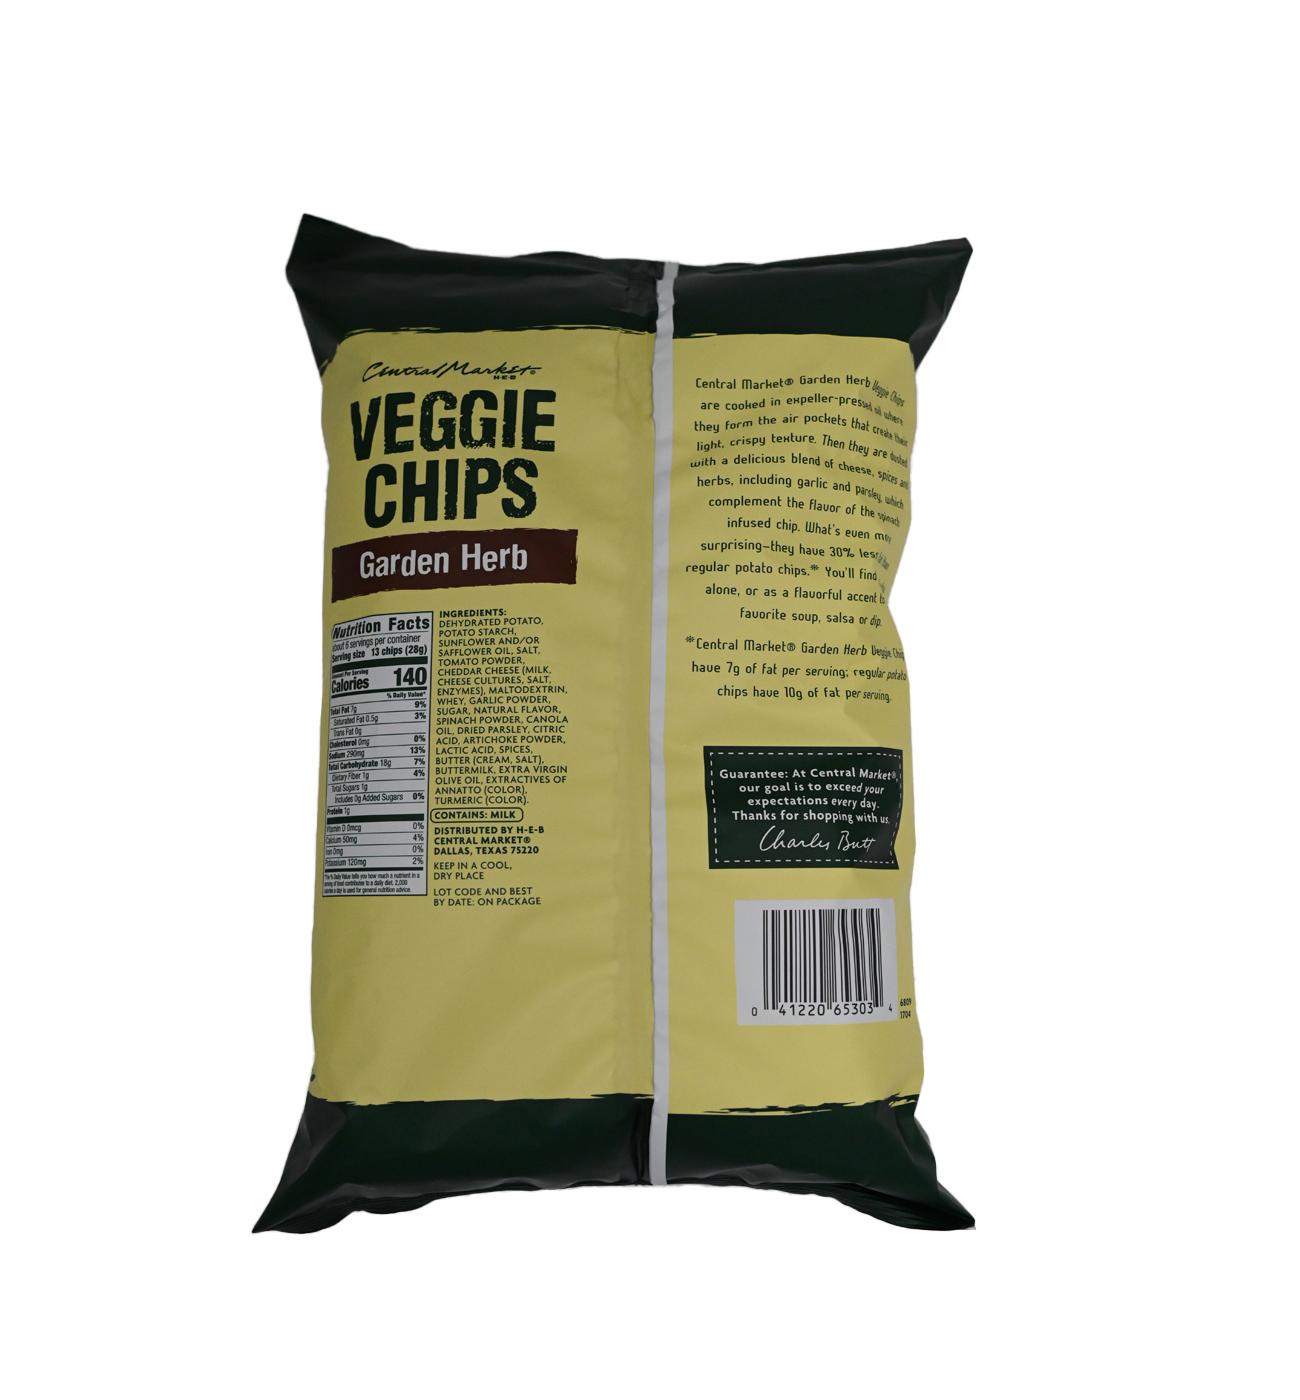 Central Market Garden Herb Veggie Chips; image 2 of 2